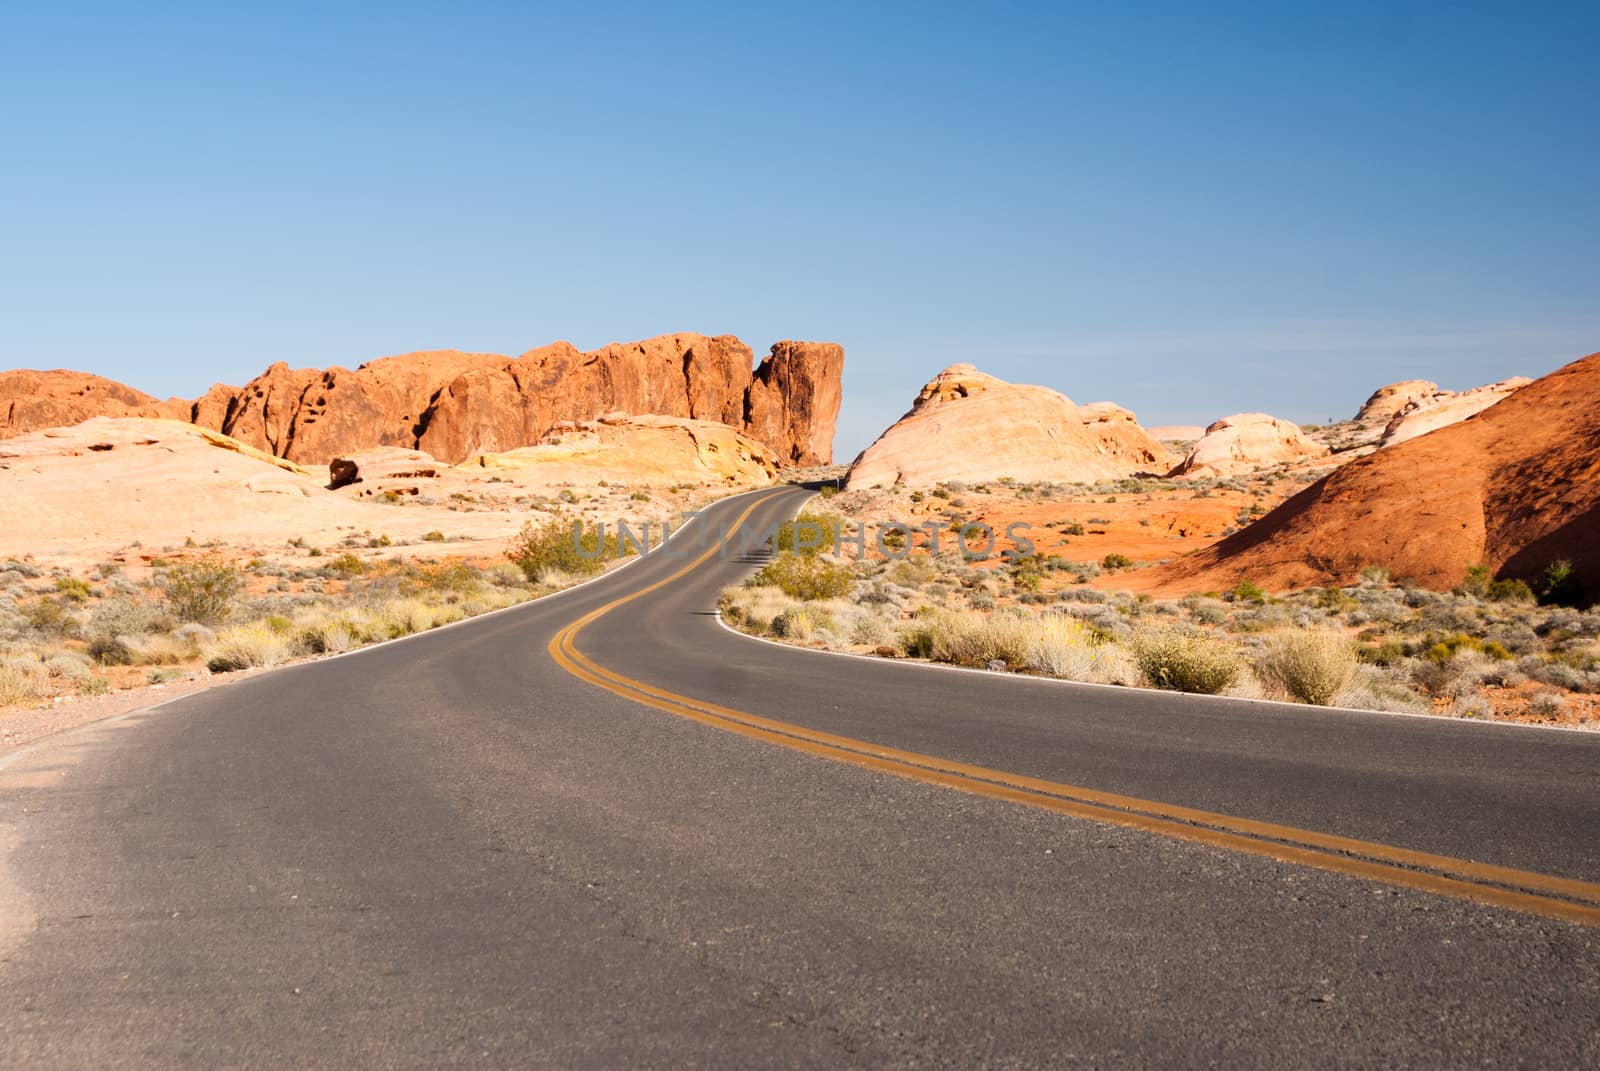 Desert Road by emattil